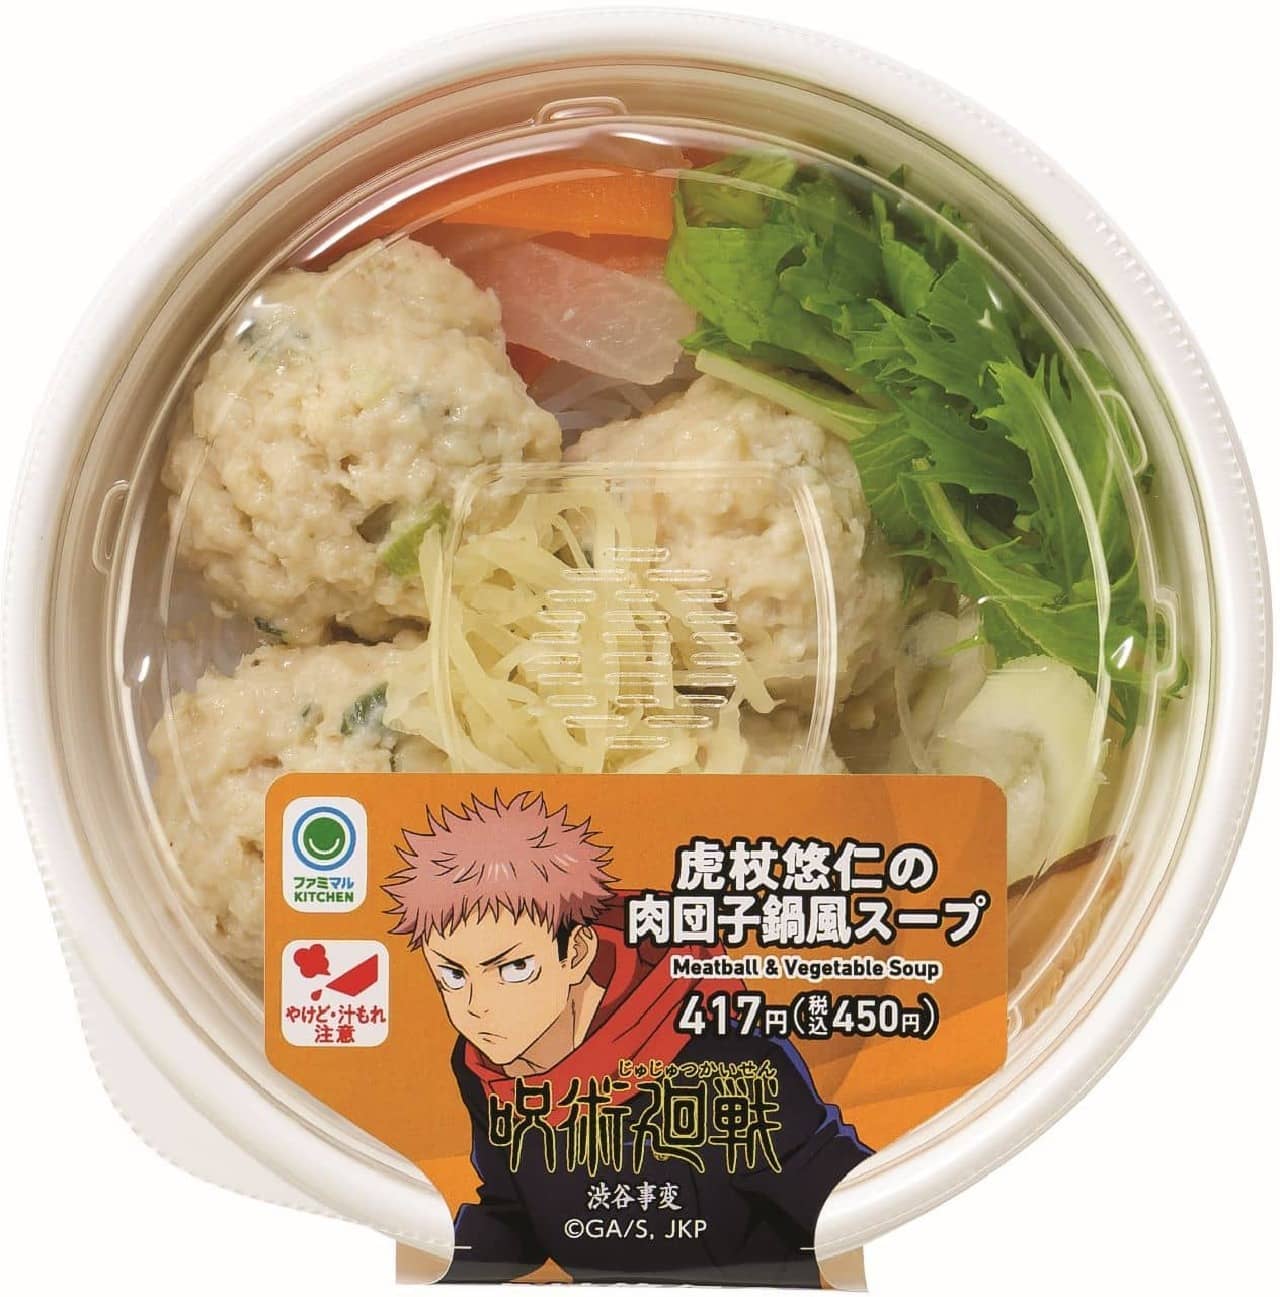 FamilyMart "Torajo Yujin's Meatballs Hot Pot Style Soup".